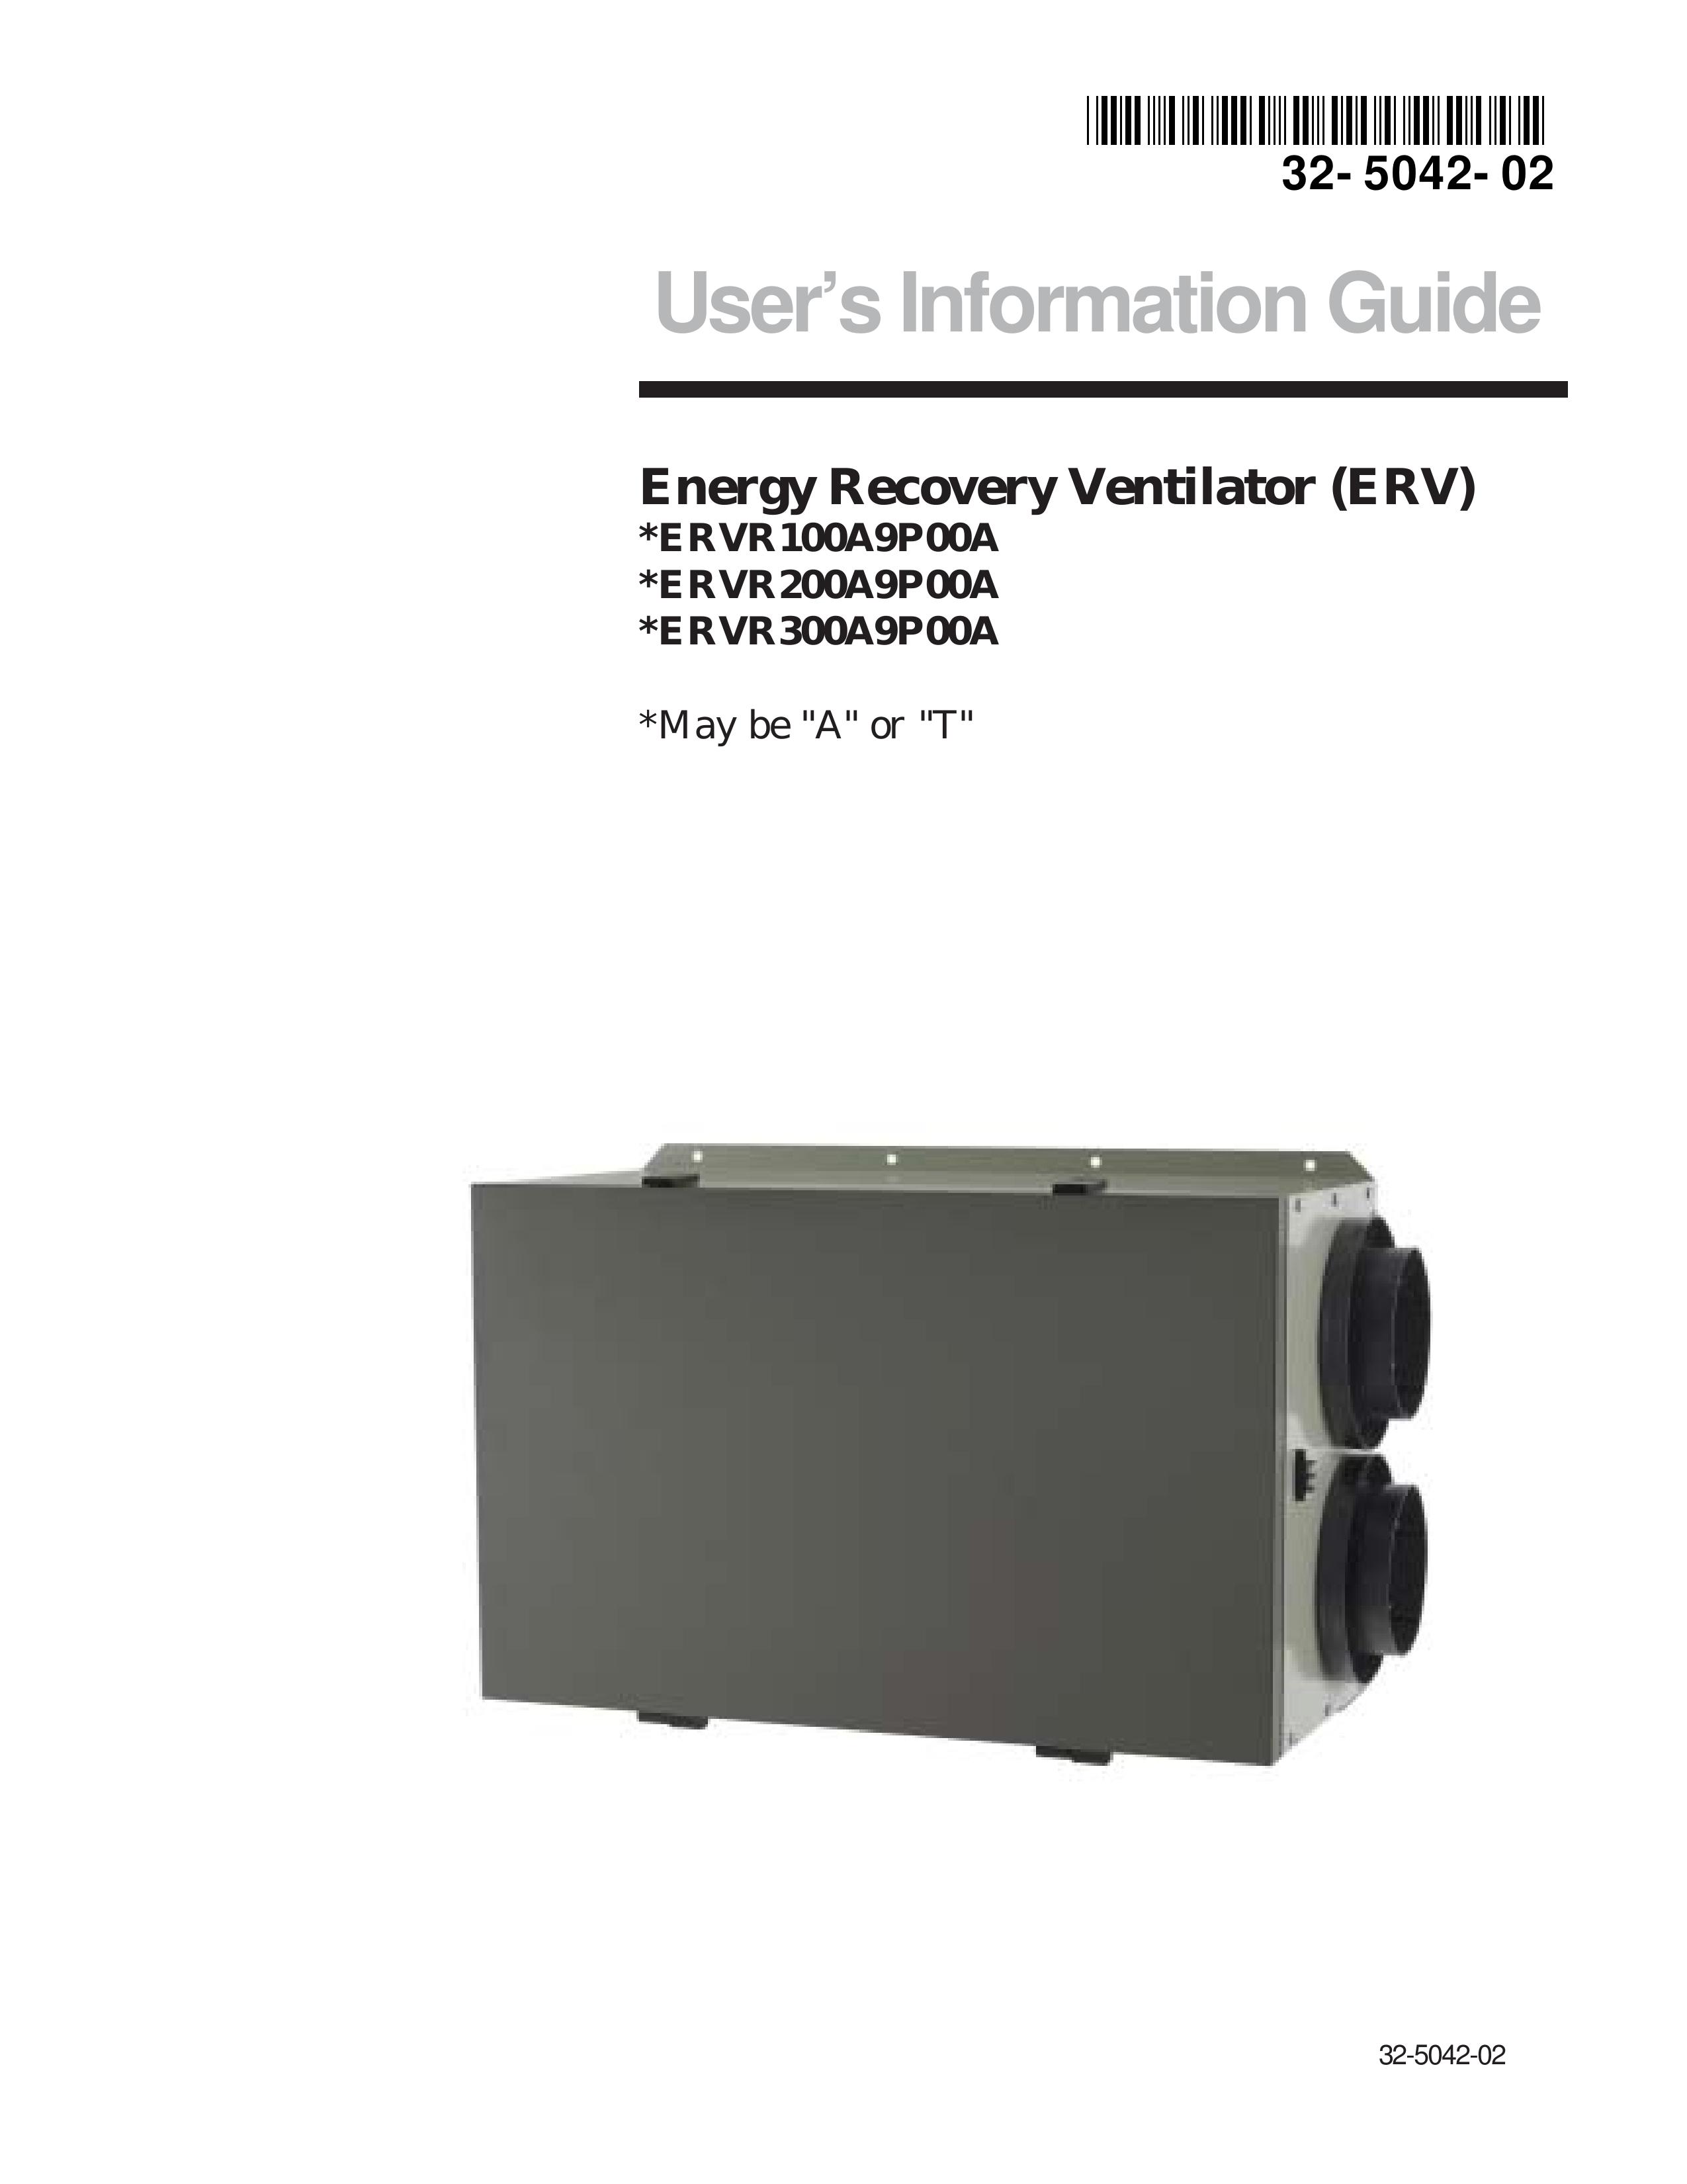 American Standard ERVR300A9P00A Ventilation Hood User Manual